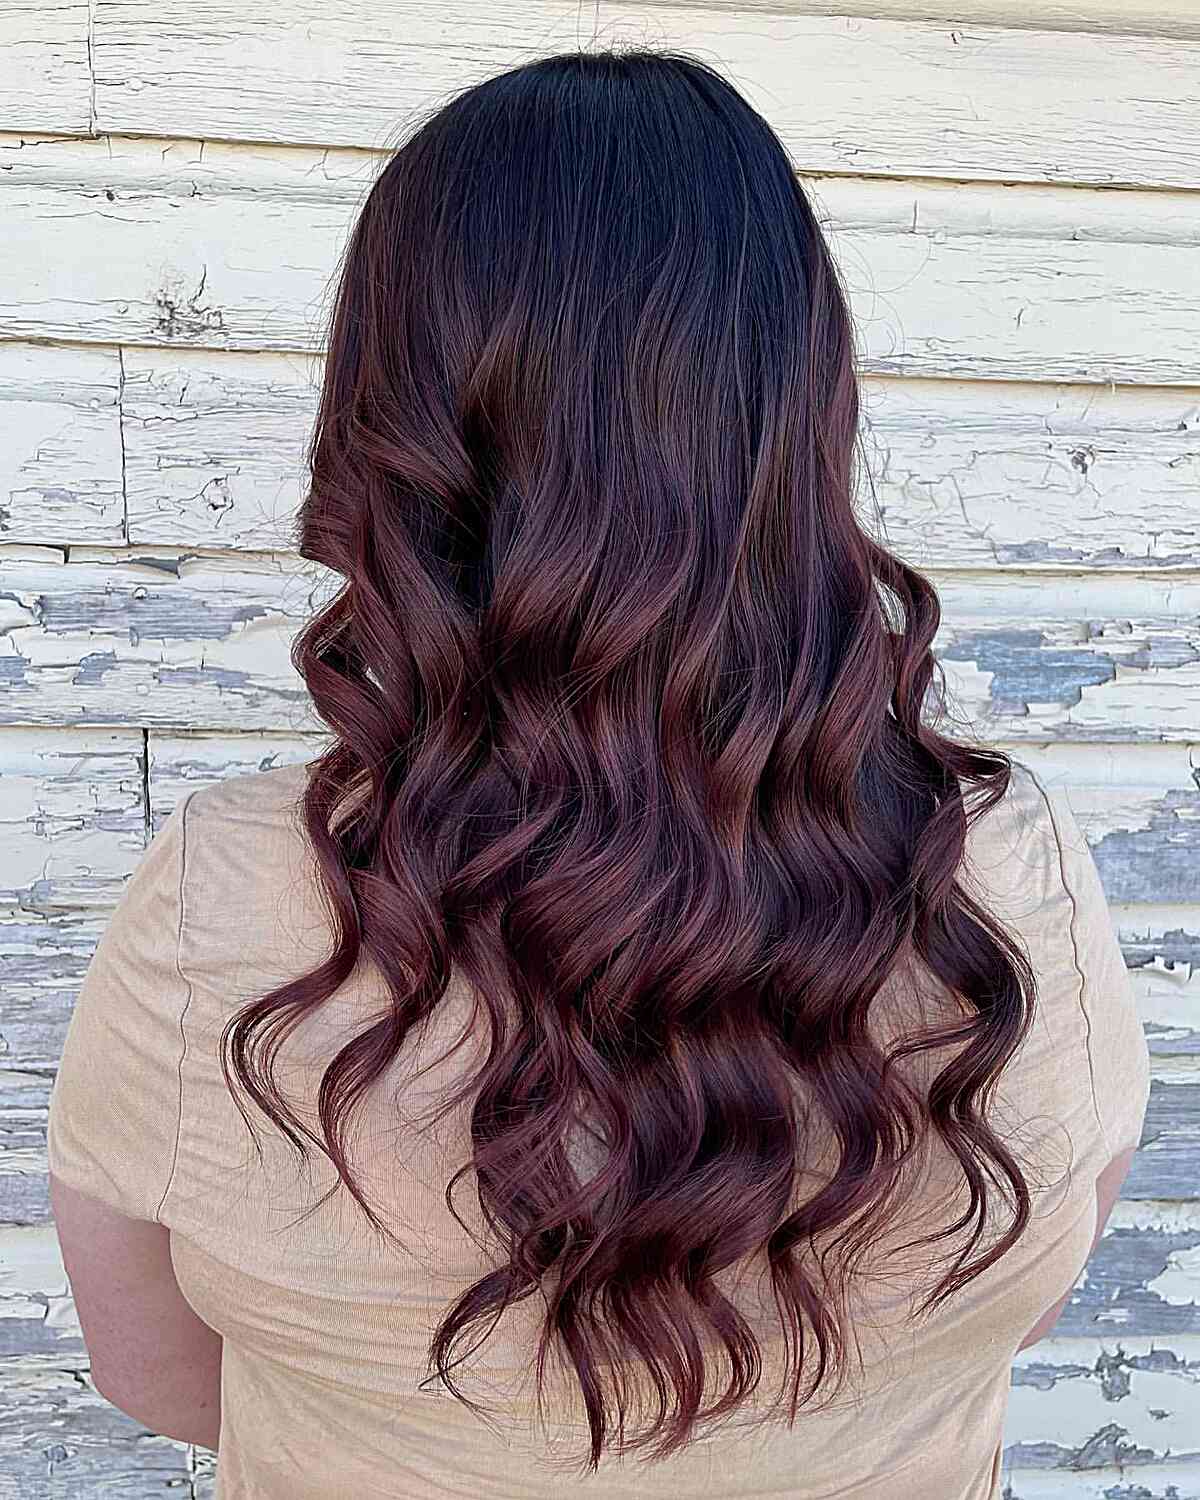 loose curls with mahogany and burgundy balayage tones